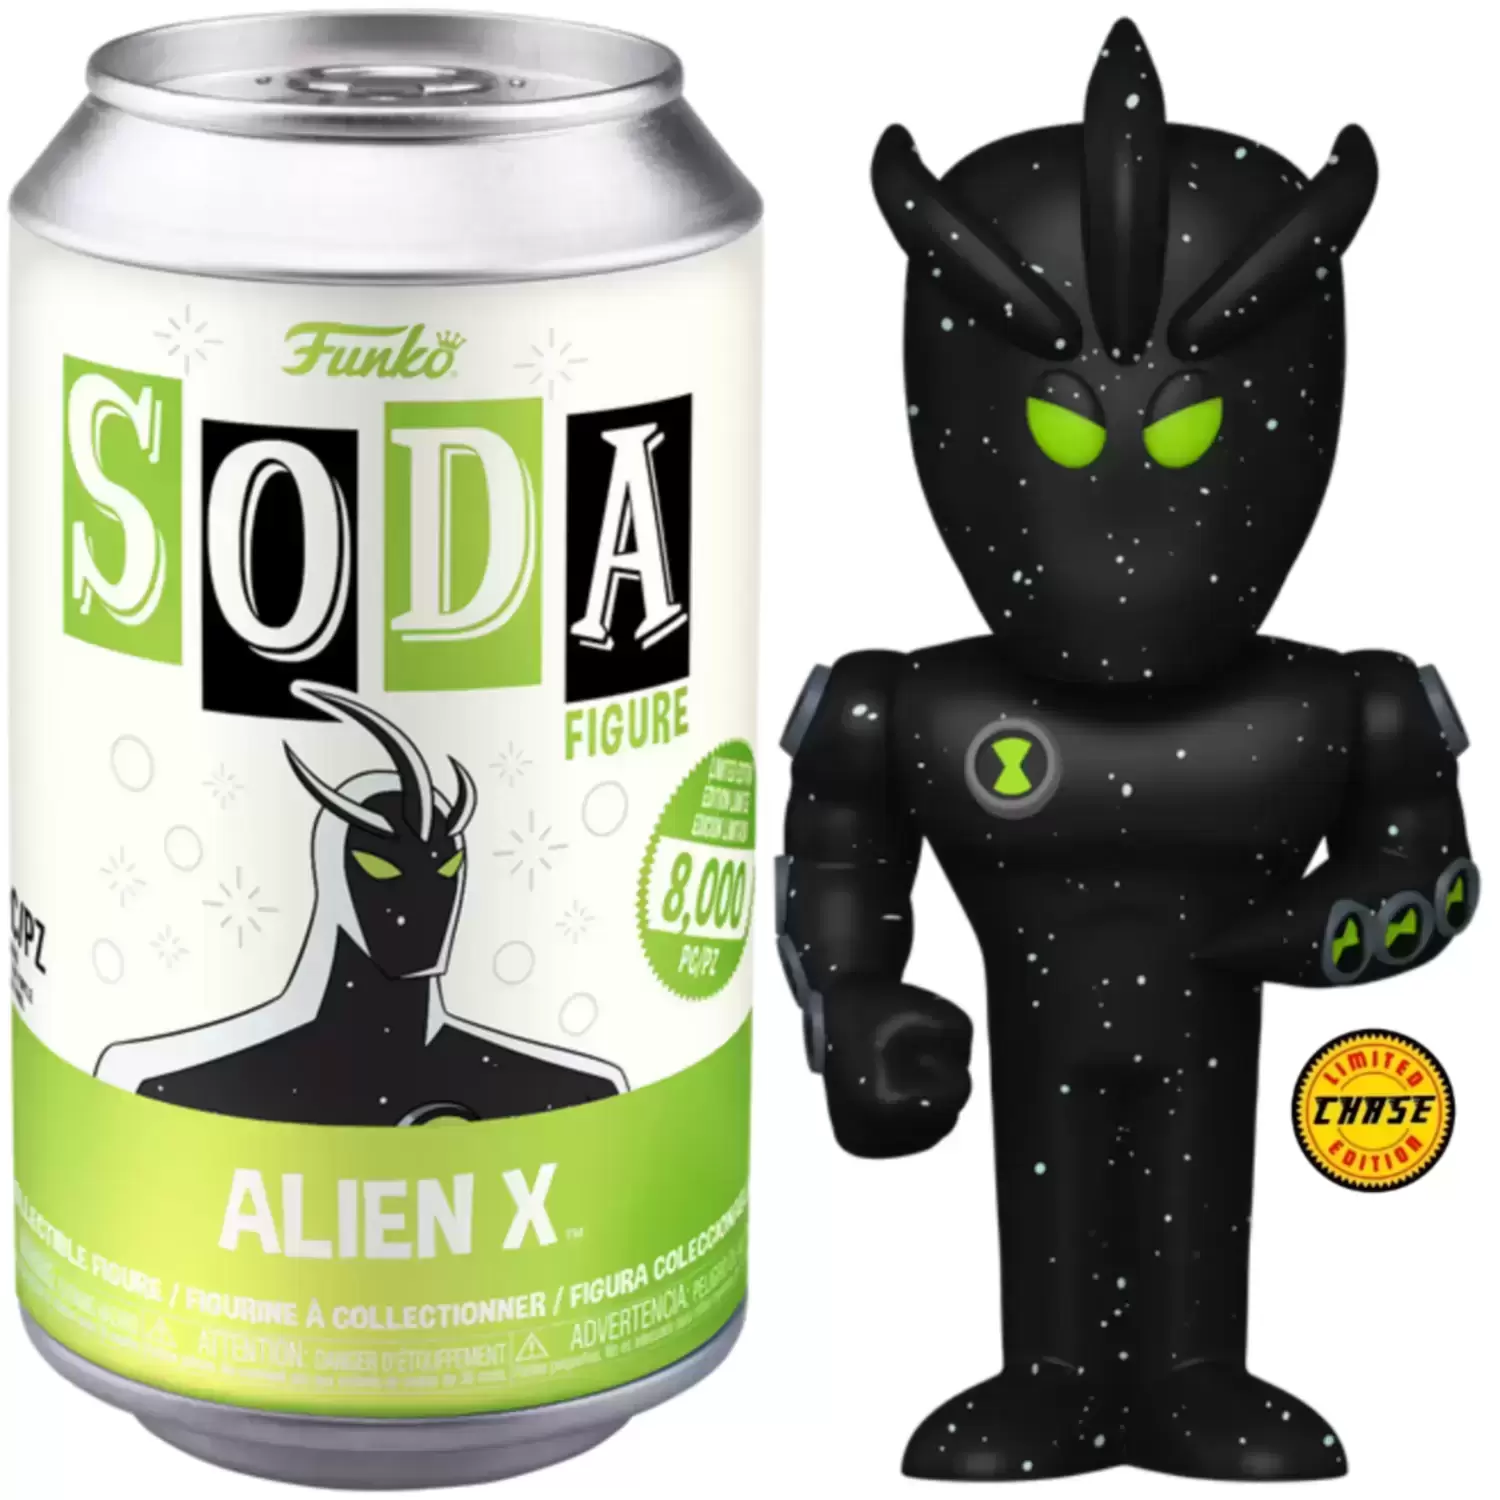 Vinyl Soda! - Ben 10 - Alien X Chase